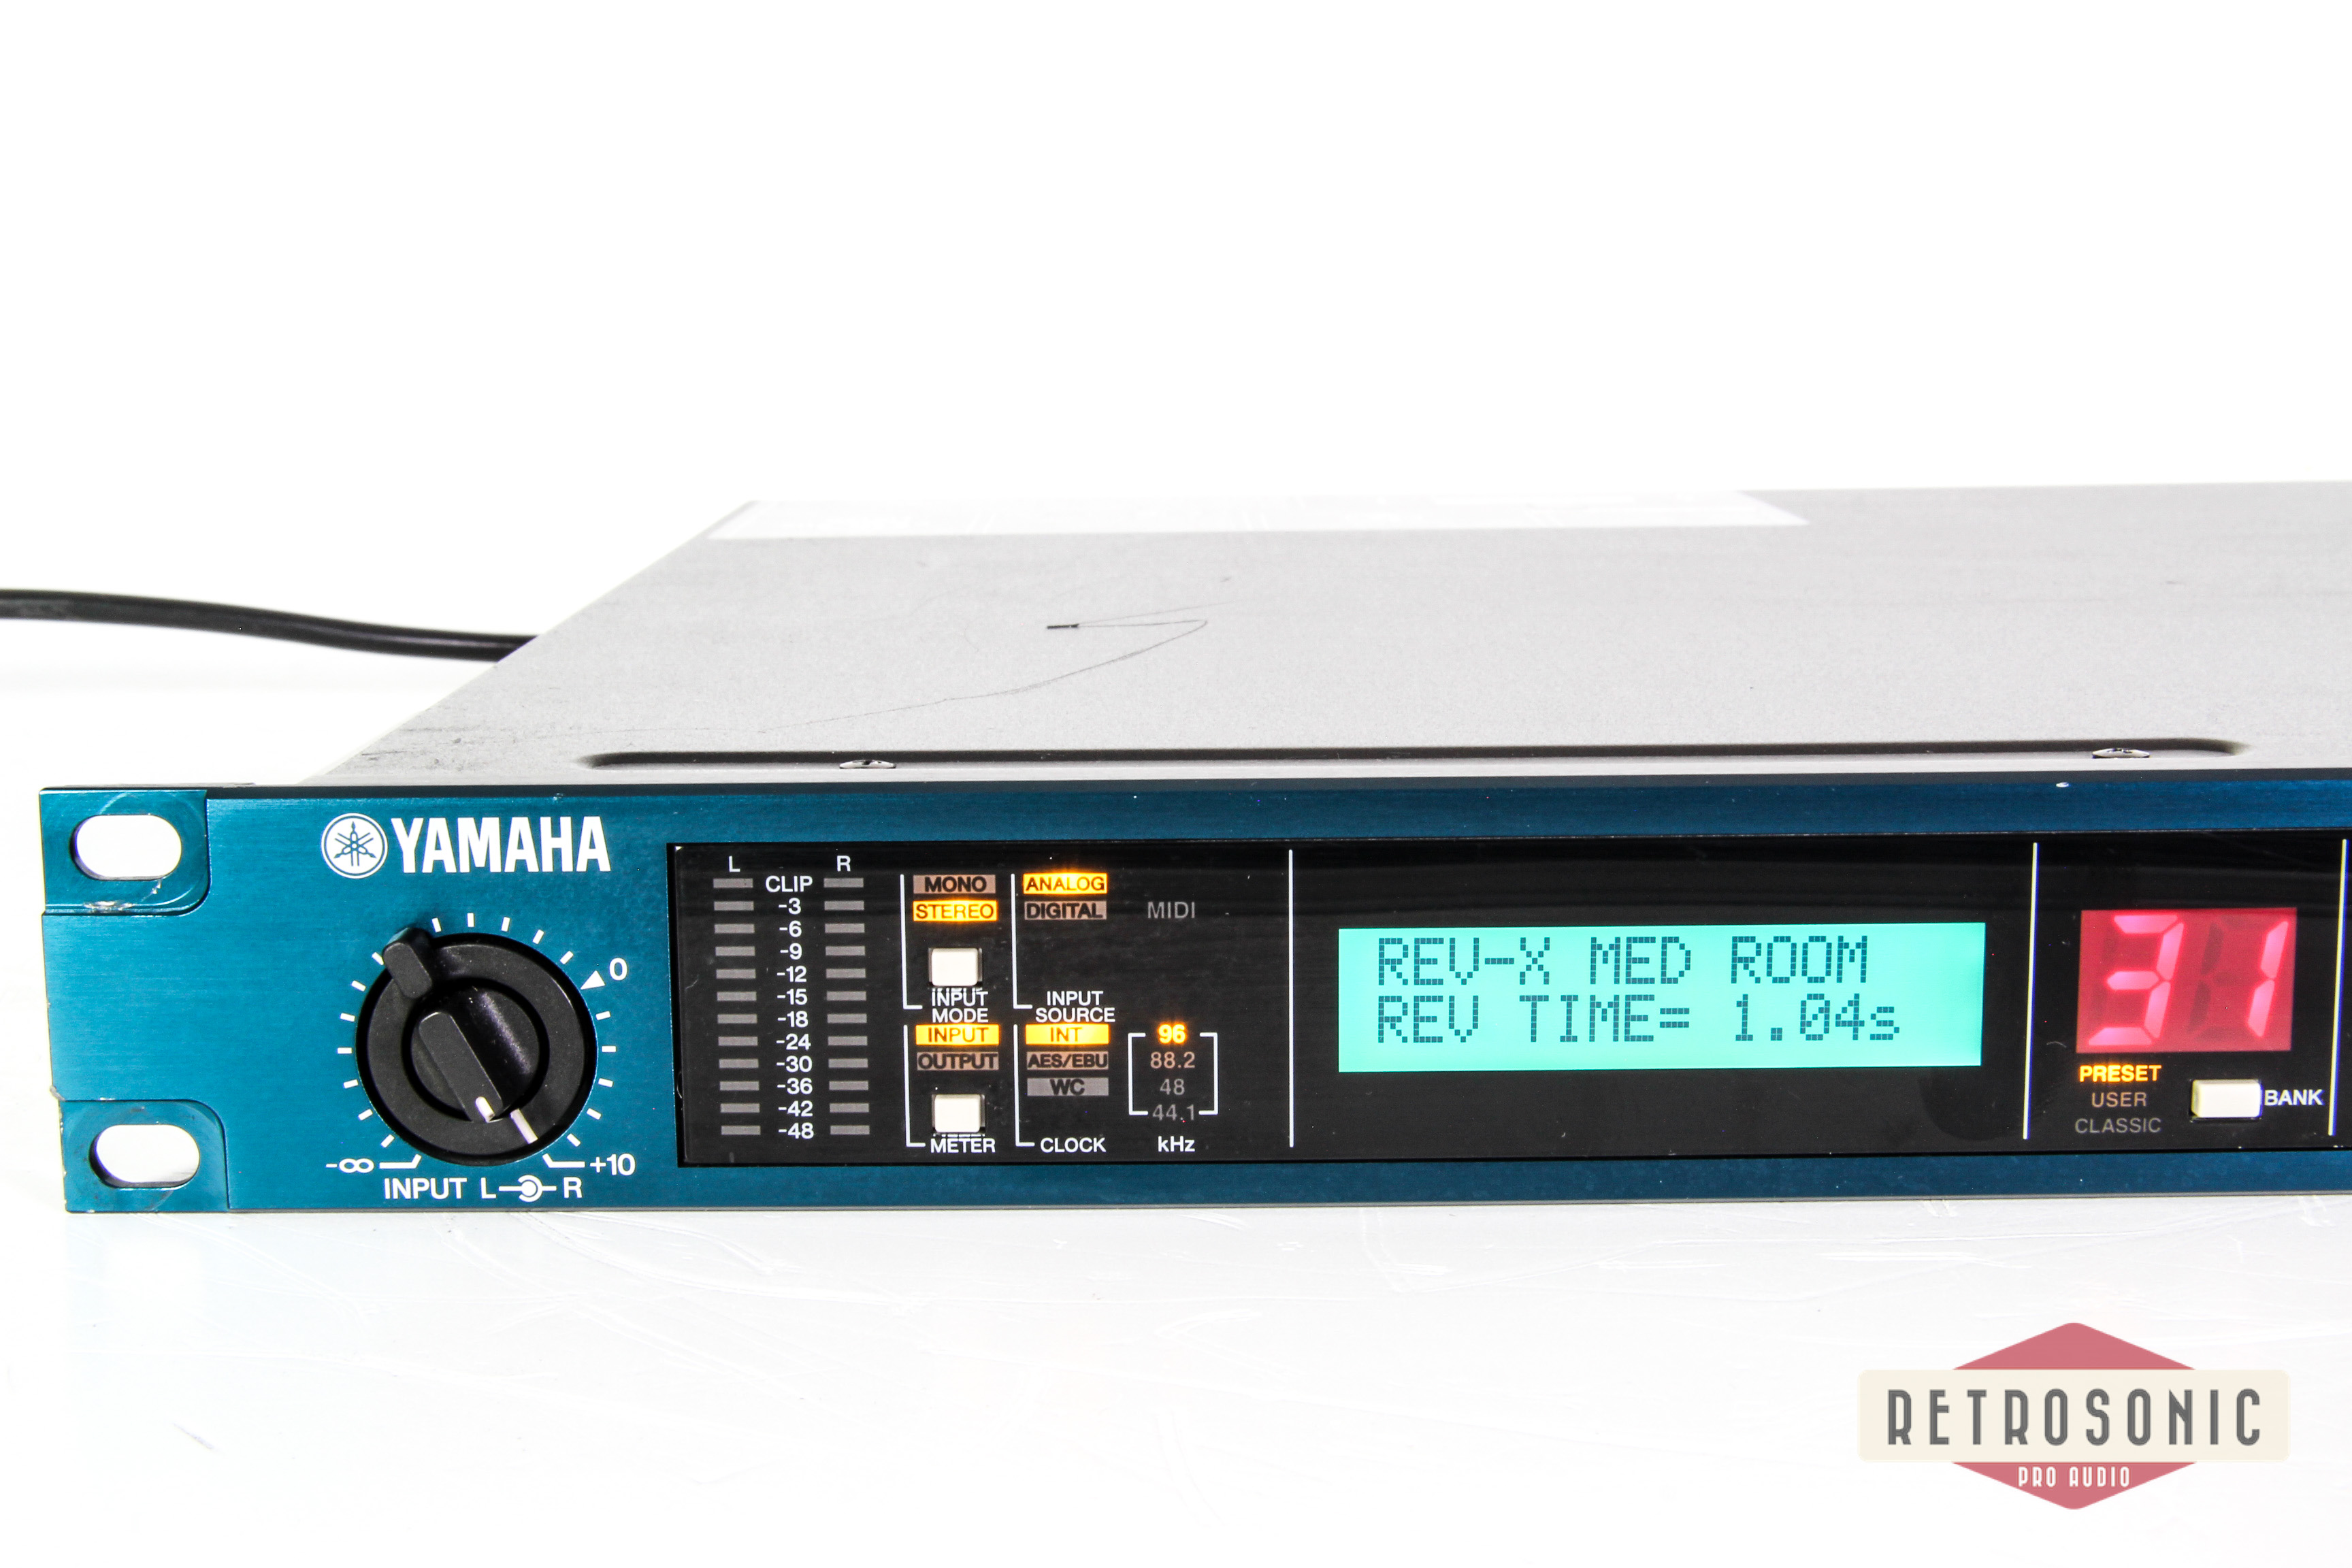 Yamaha SPX2000 Digital Effects Processor